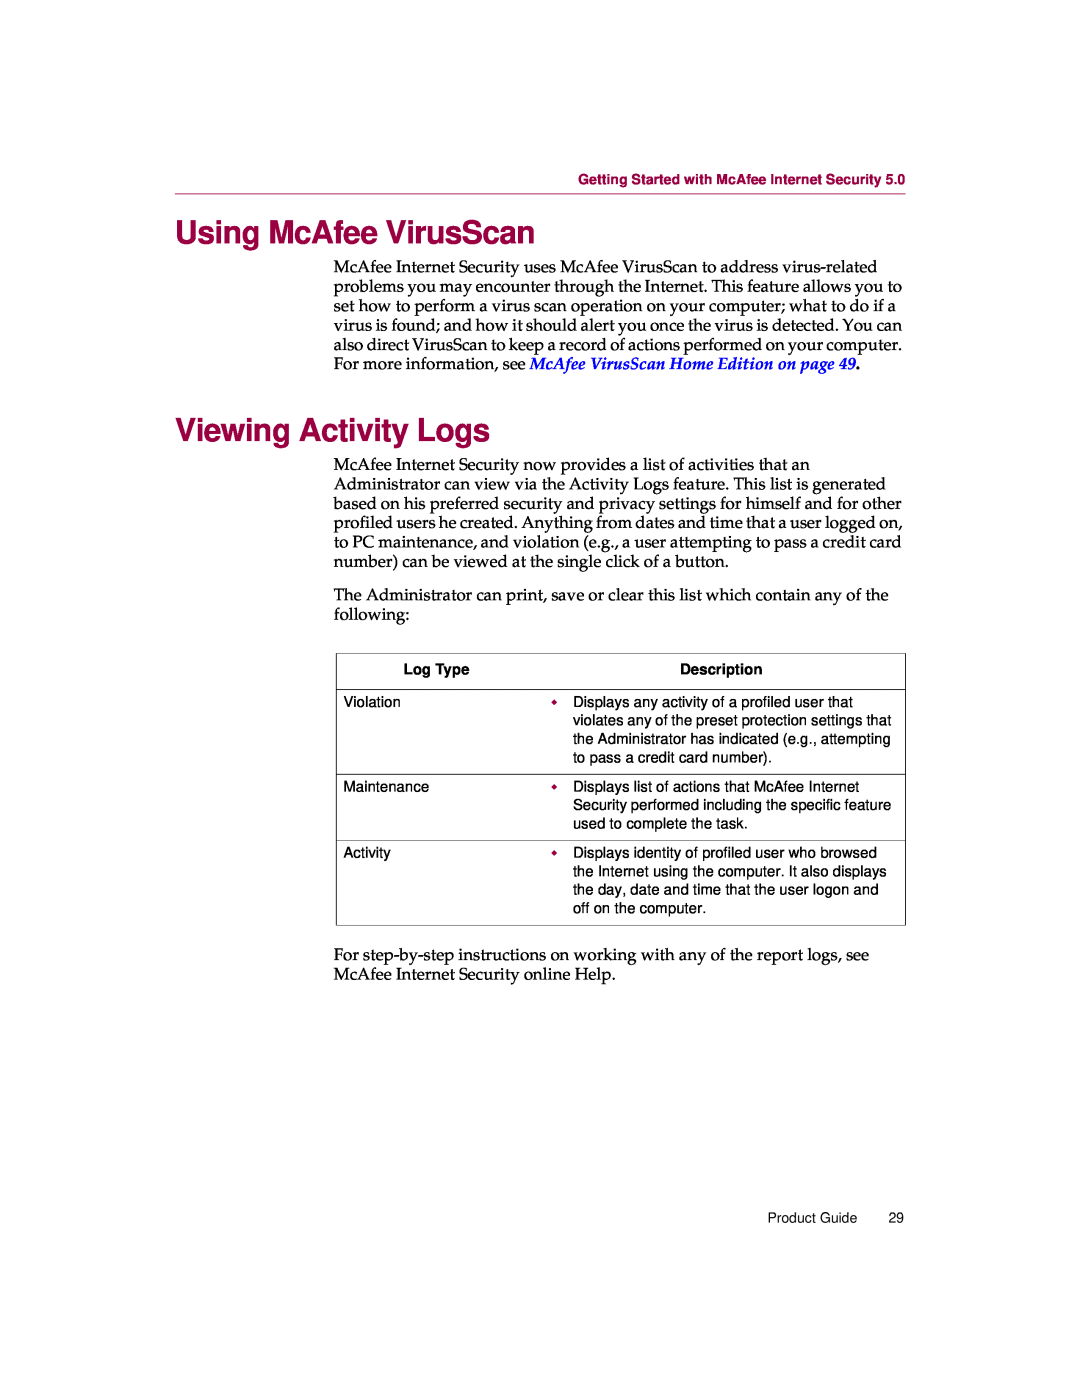 McAfee 5 manual Using McAfee VirusScan, Viewing Activity Logs 